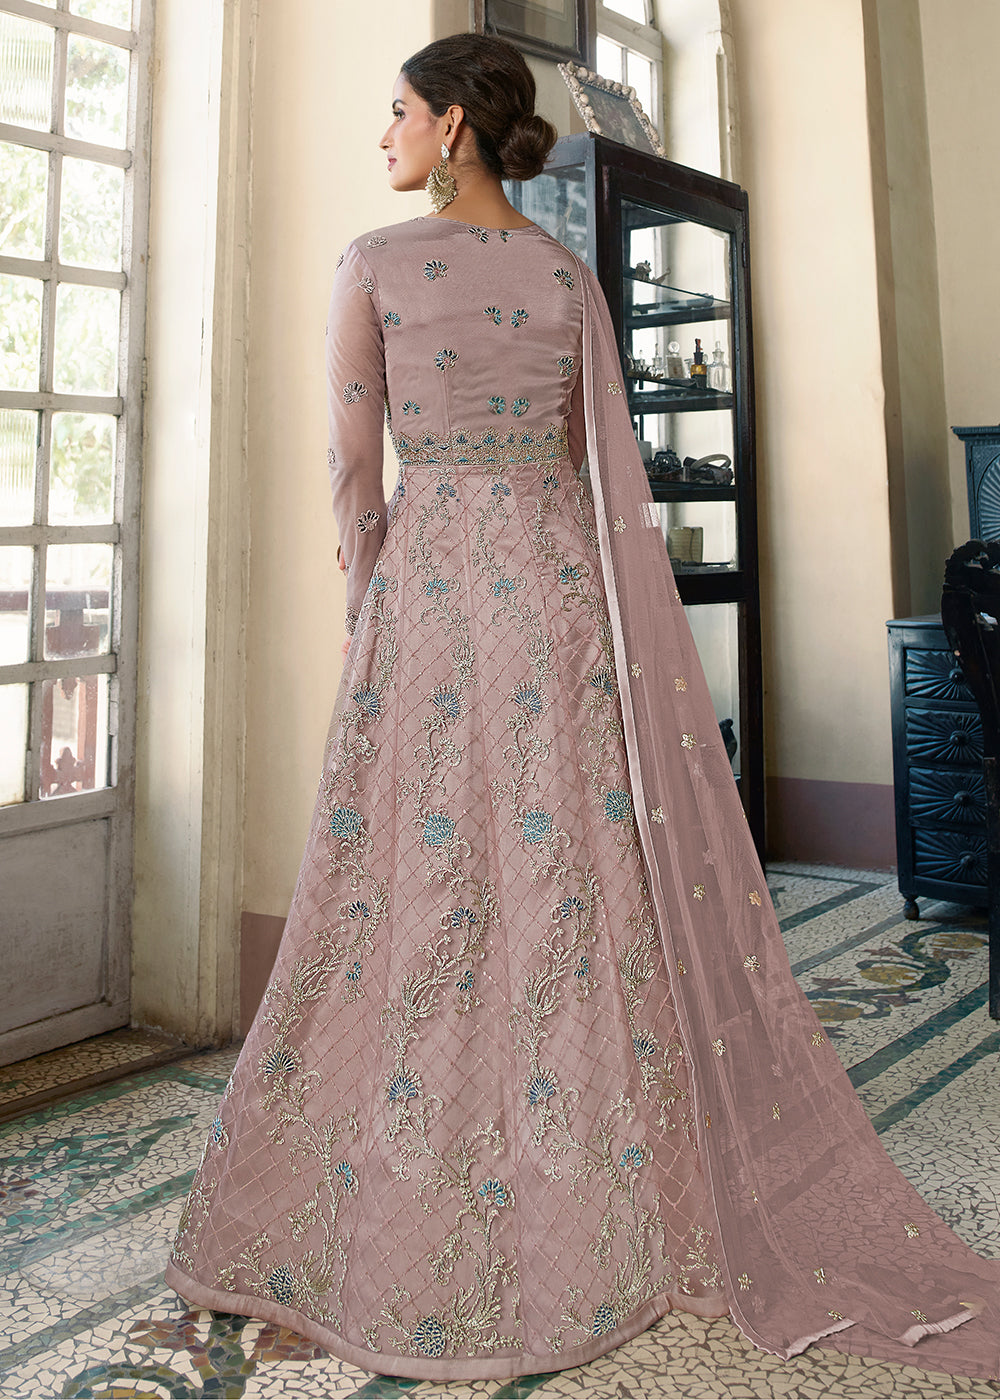 Buy Now Mauve Pink Wedding Party Net Designer Anarkali Suit Online in USA, UK, Australia, New Zealand, Canada & Worldwide at Empress Clothing.